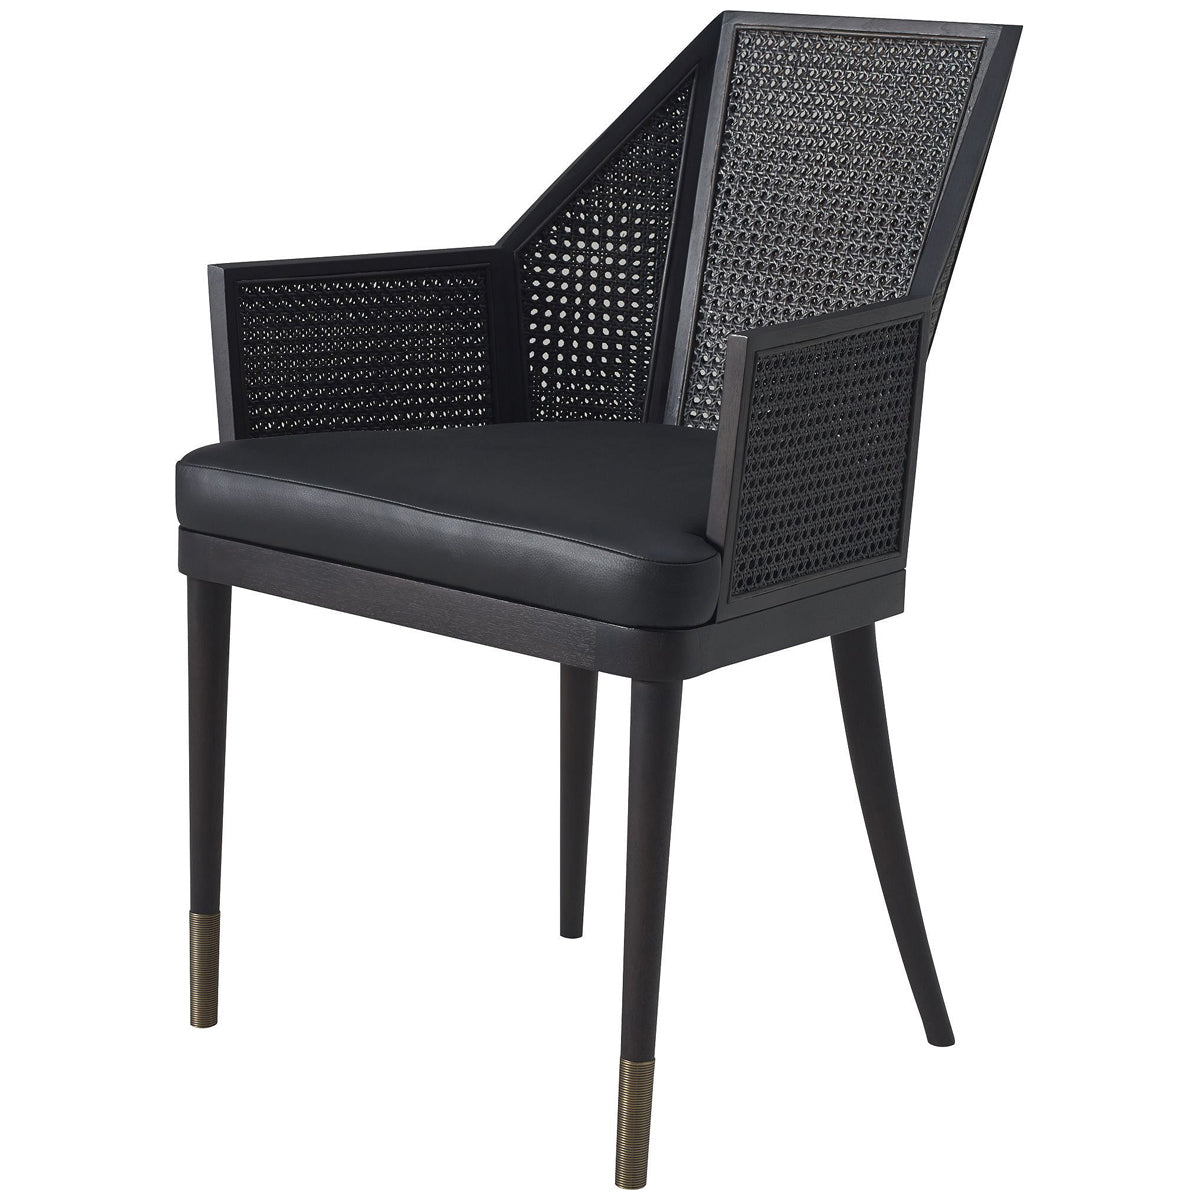 Baker Furniture Cane Arm Chair MR7041